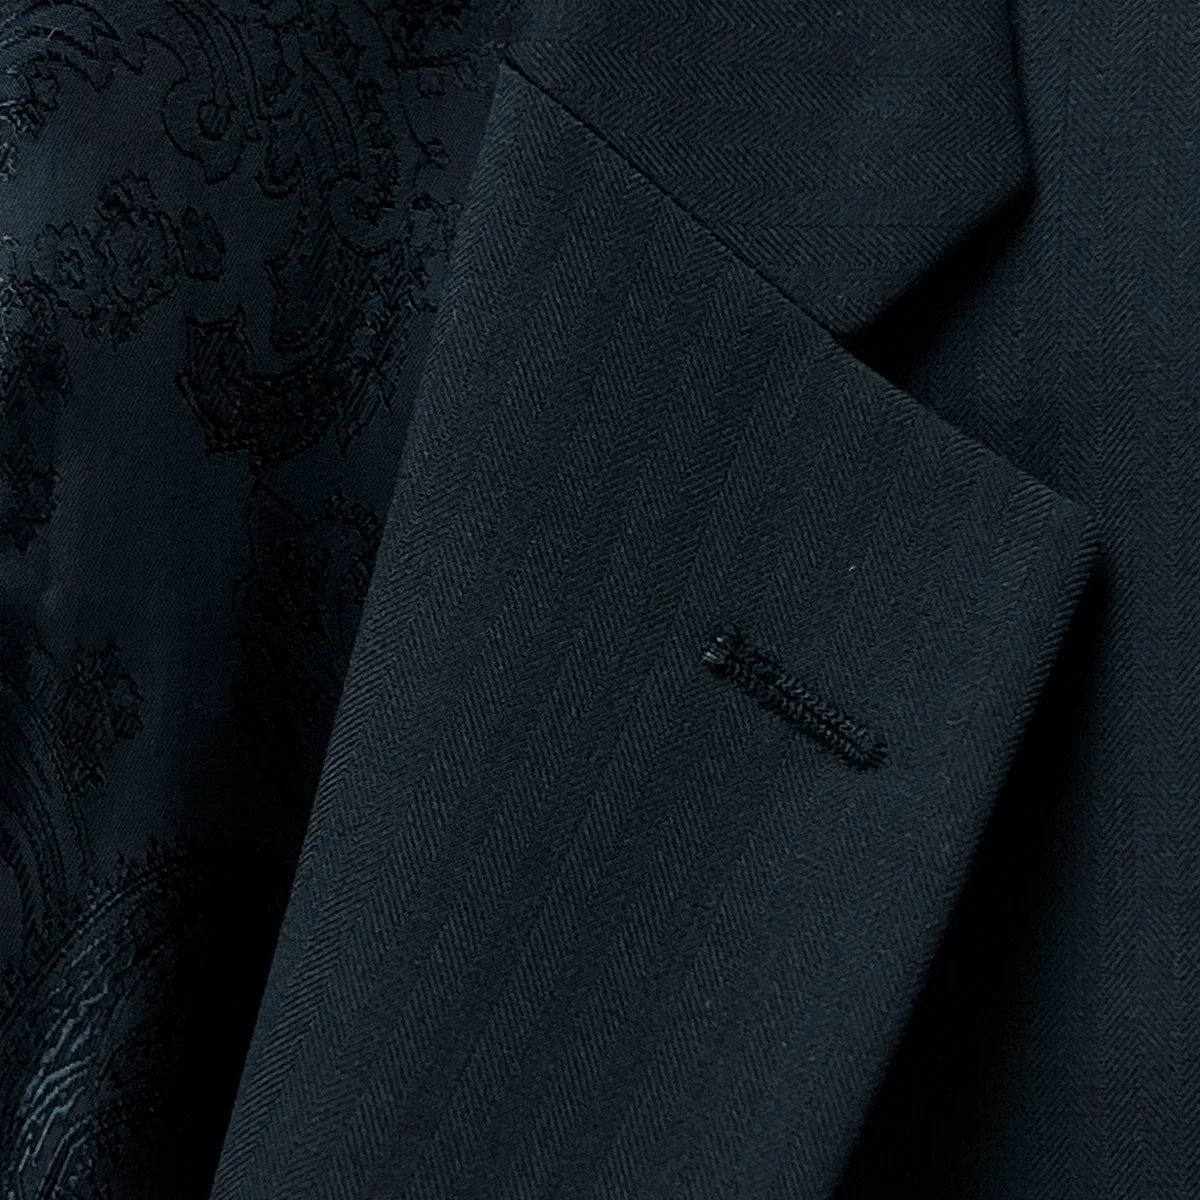 Classic notch lapel on a black herringbone men's suit.